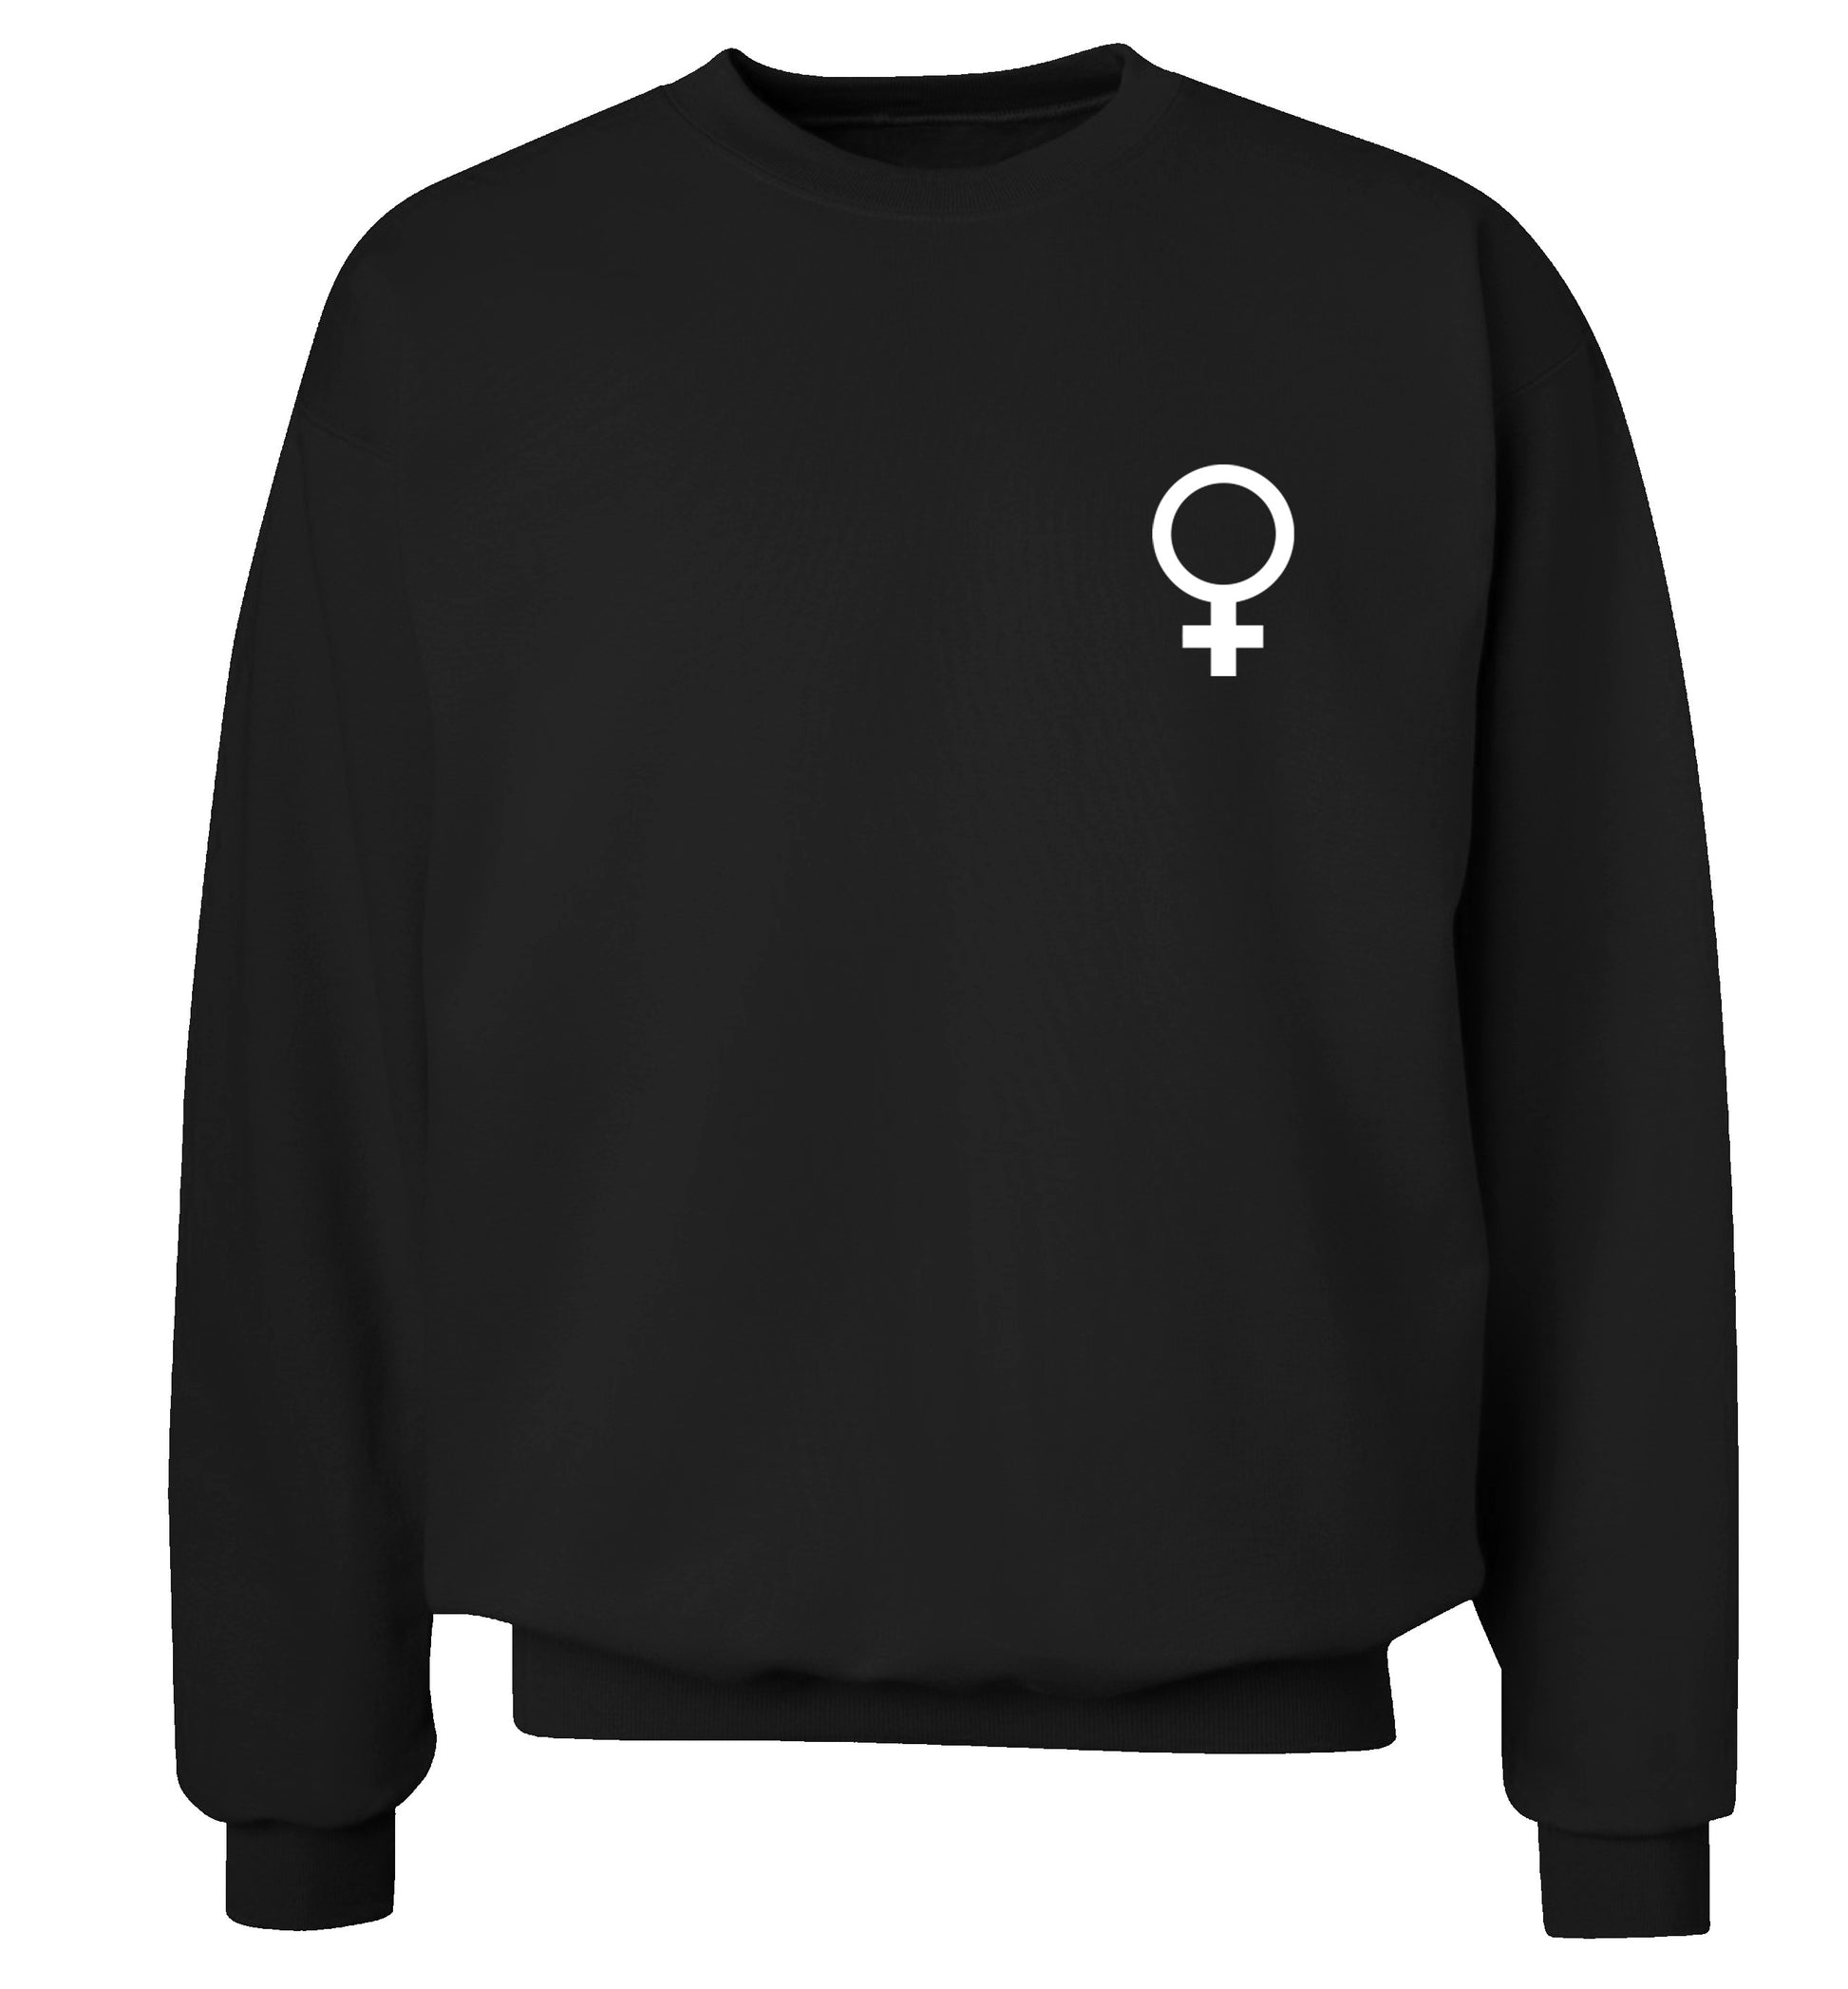 Female pocket symbol Adult's unisex black Sweater 2XL